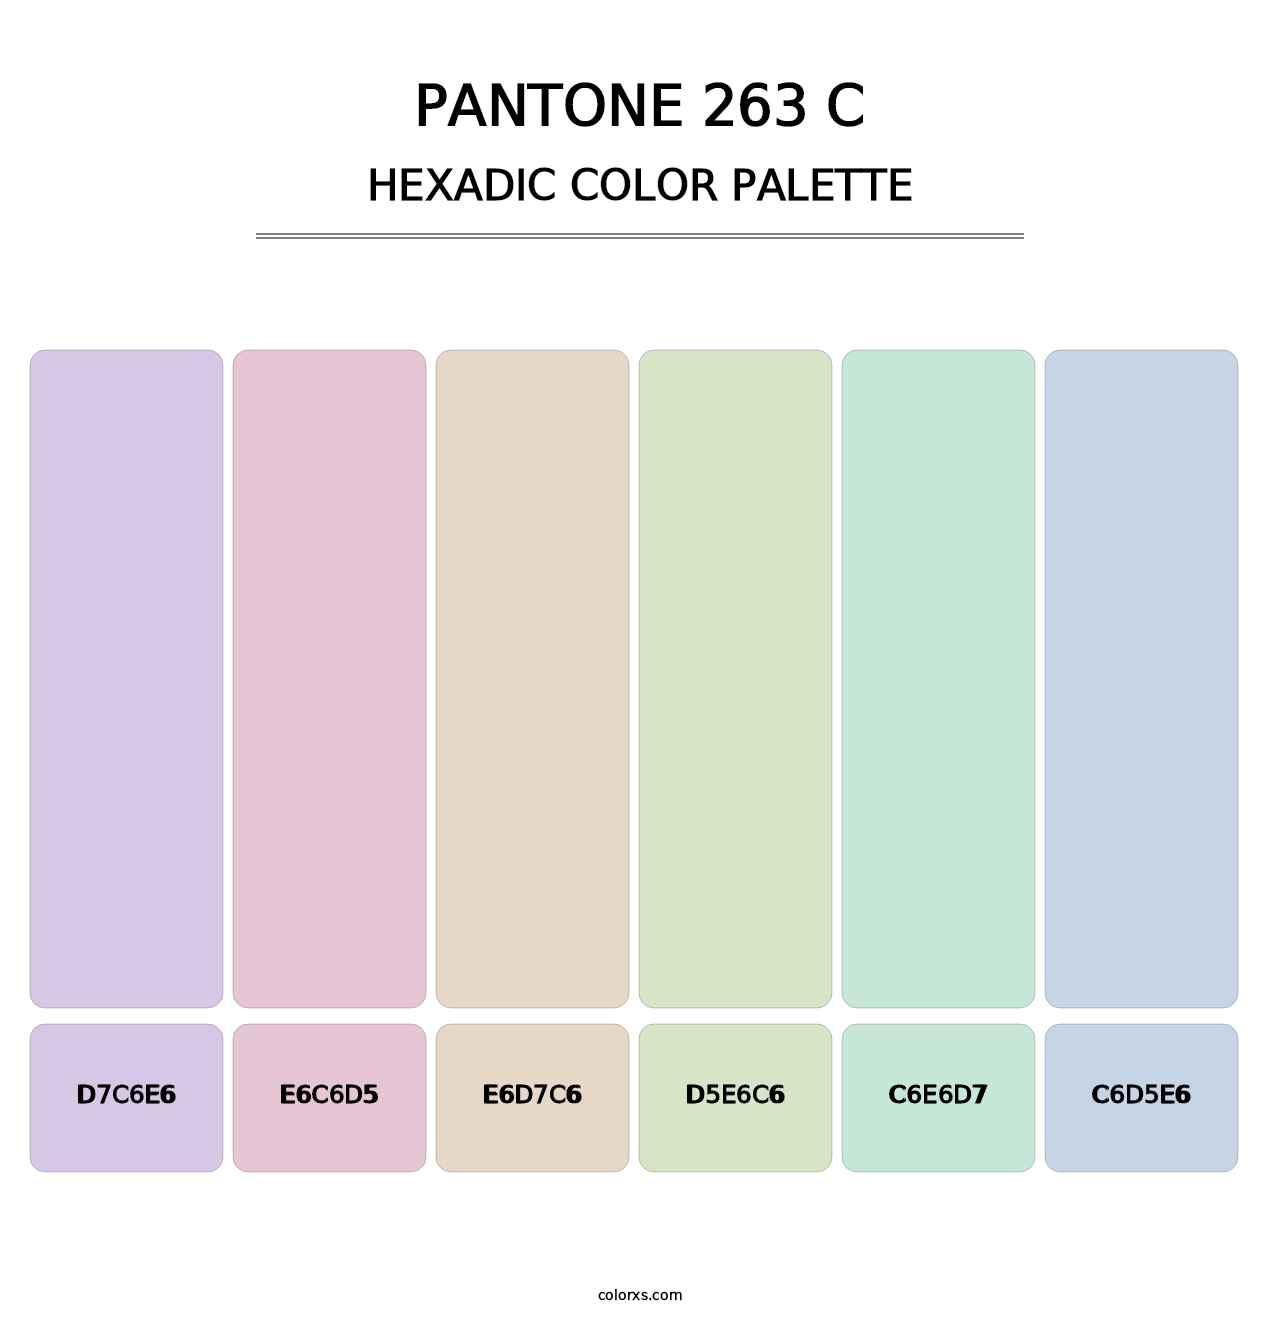 PANTONE 263 C - Hexadic Color Palette